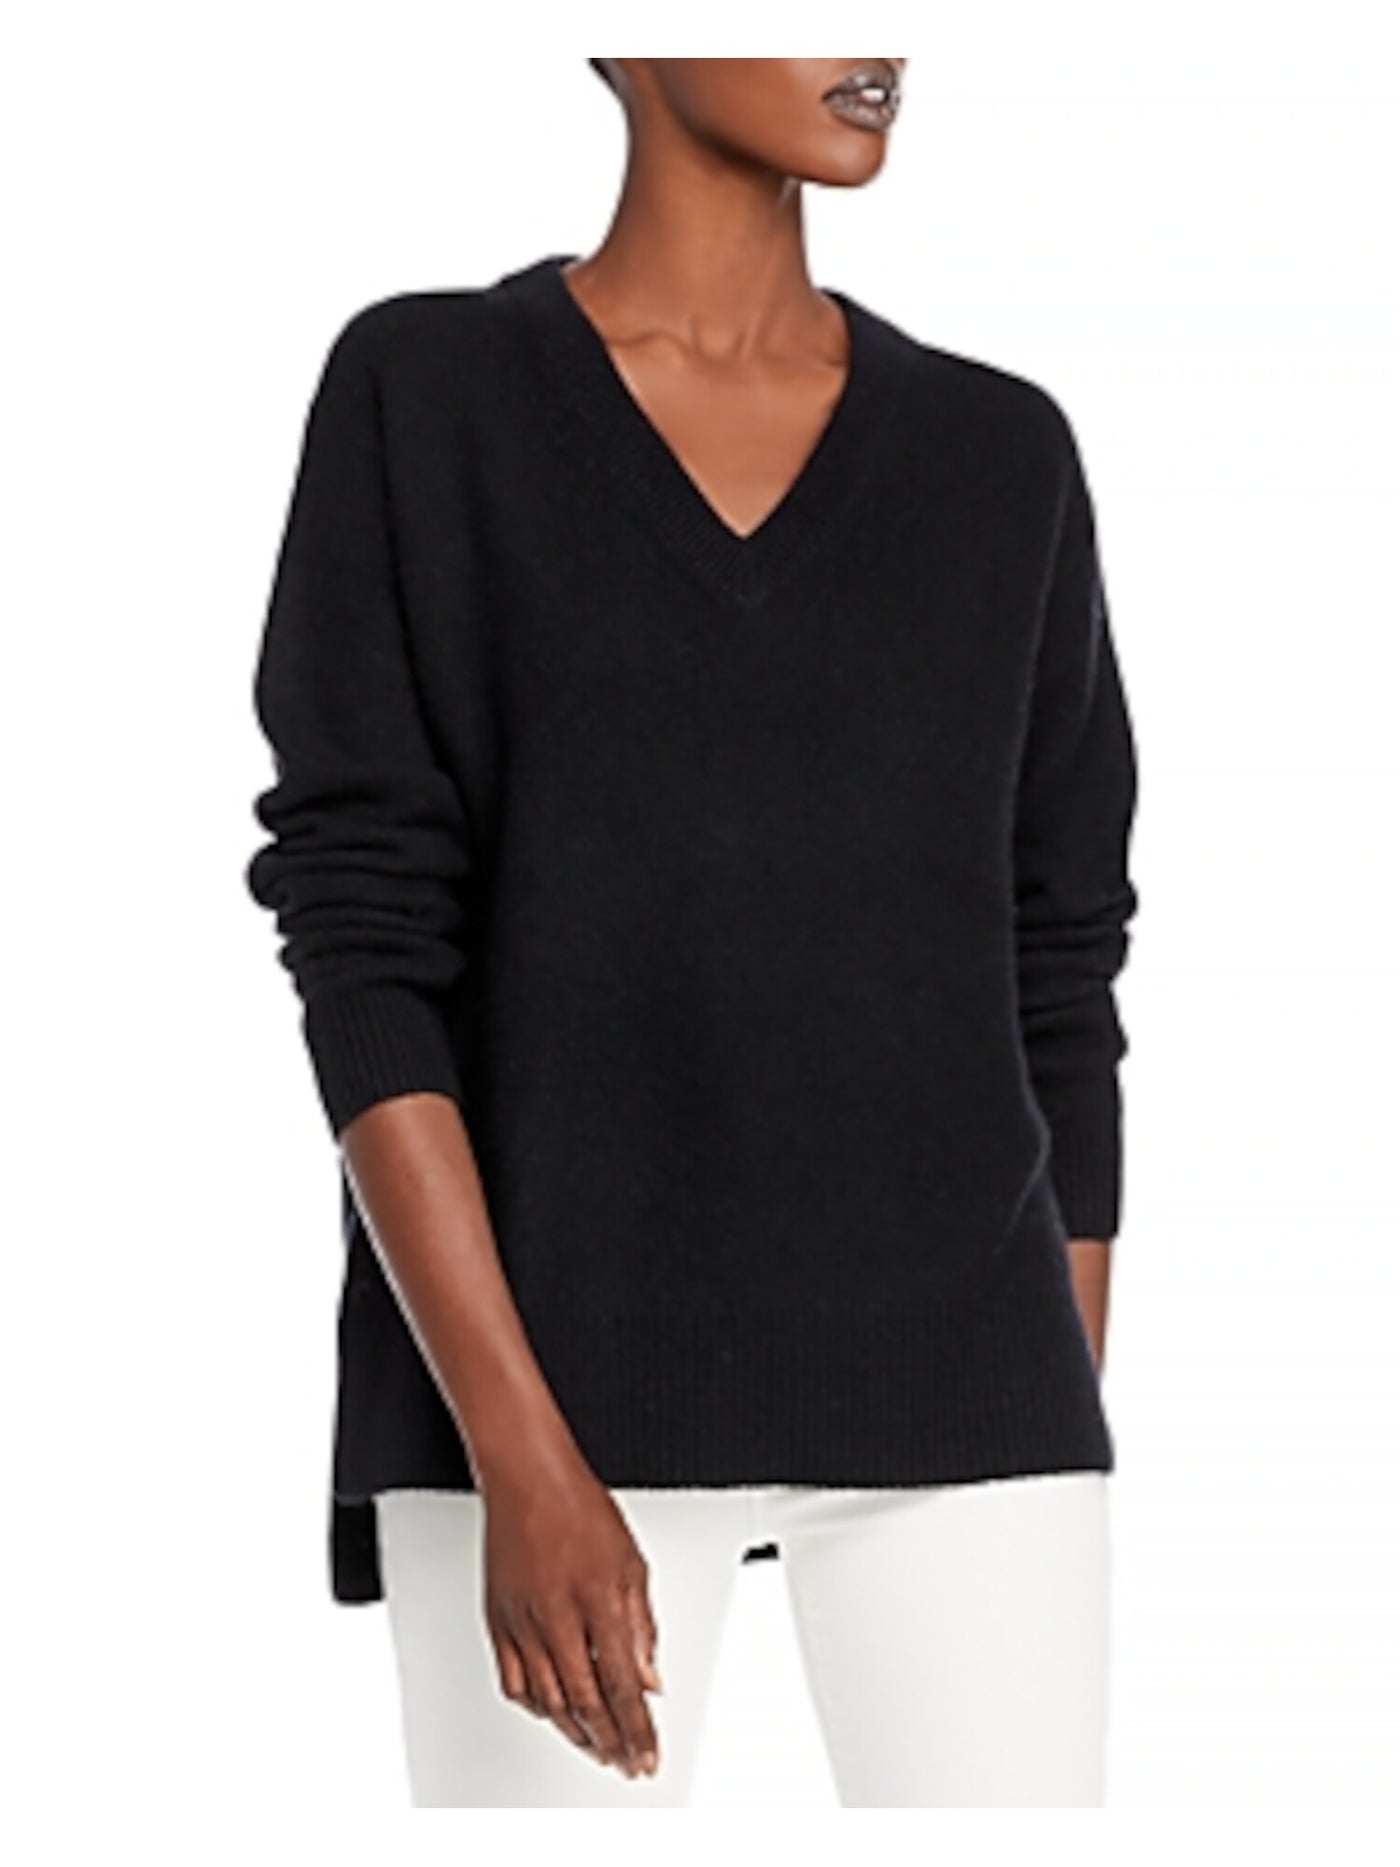 Designer Brand Womens Black Long Sleeve V Neck Hi-Lo Sweater XS